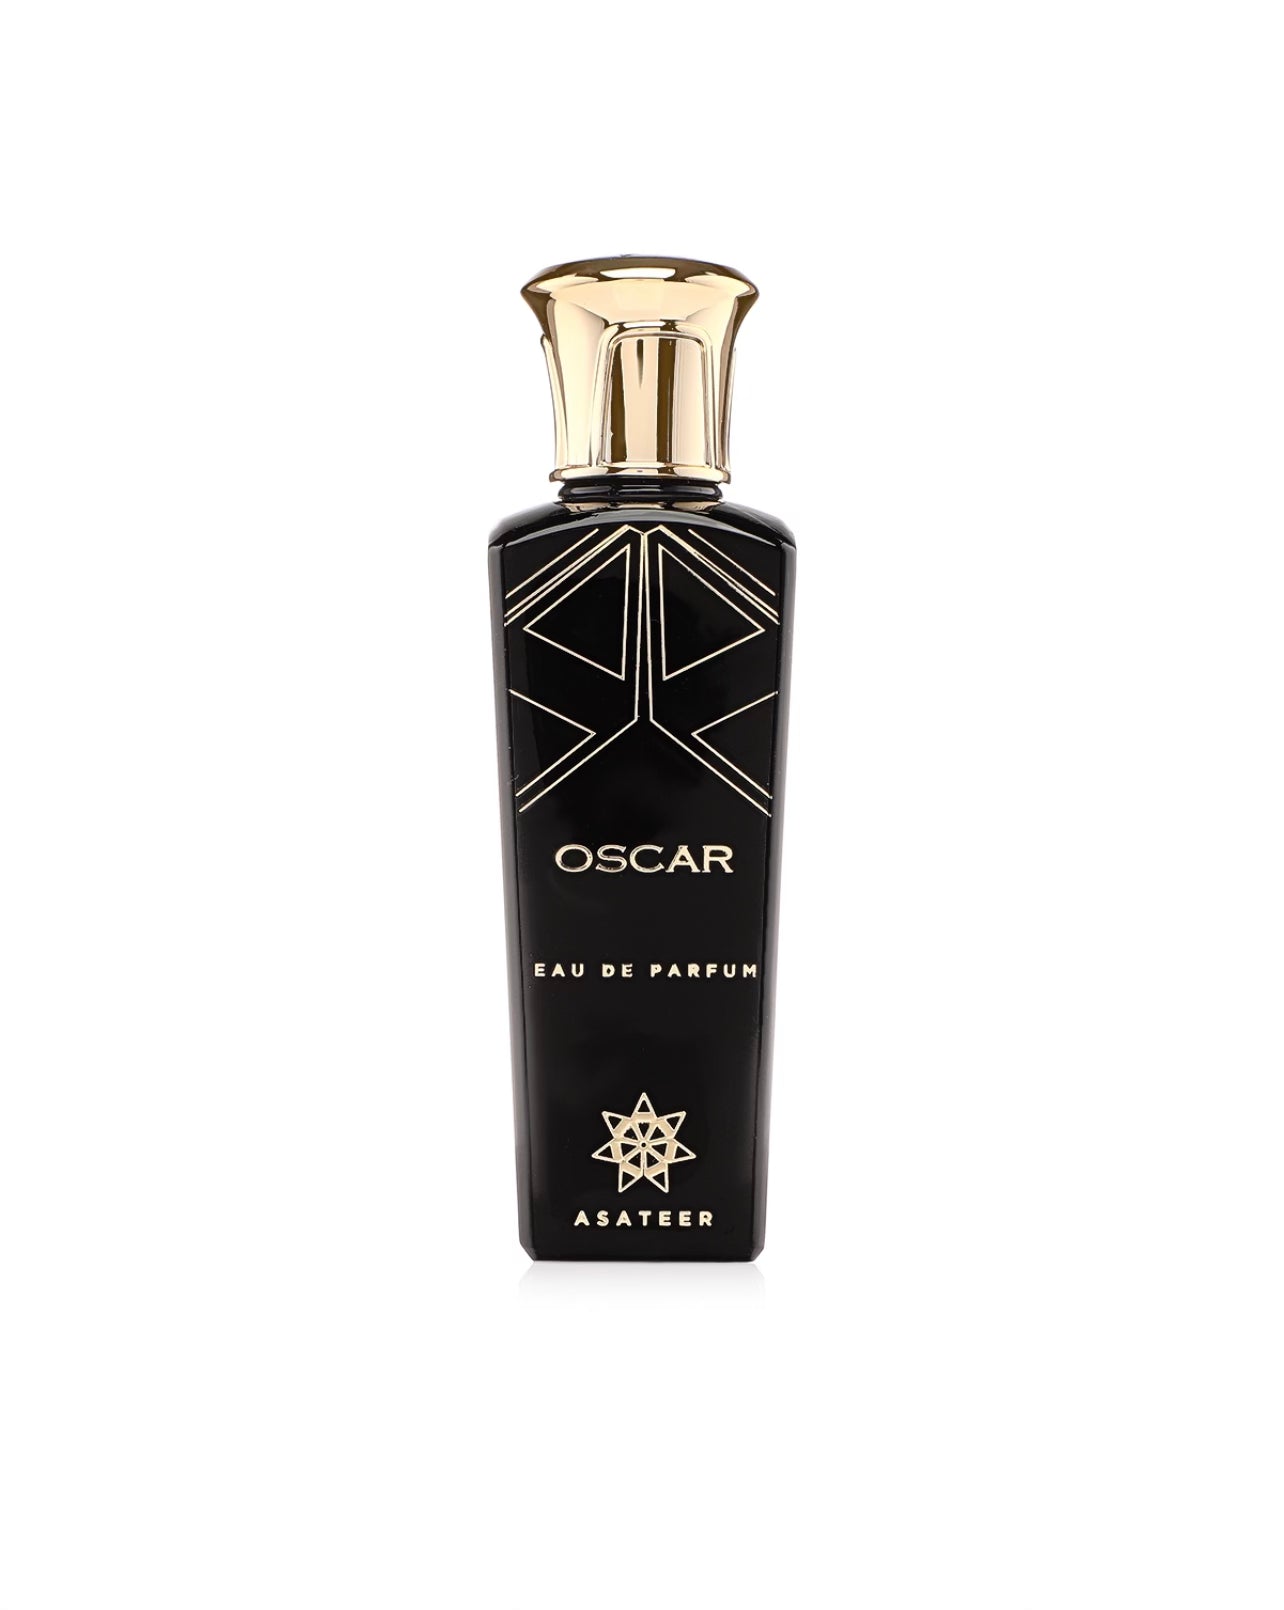 Asateer Oscar Eau de Parfum - 80ml